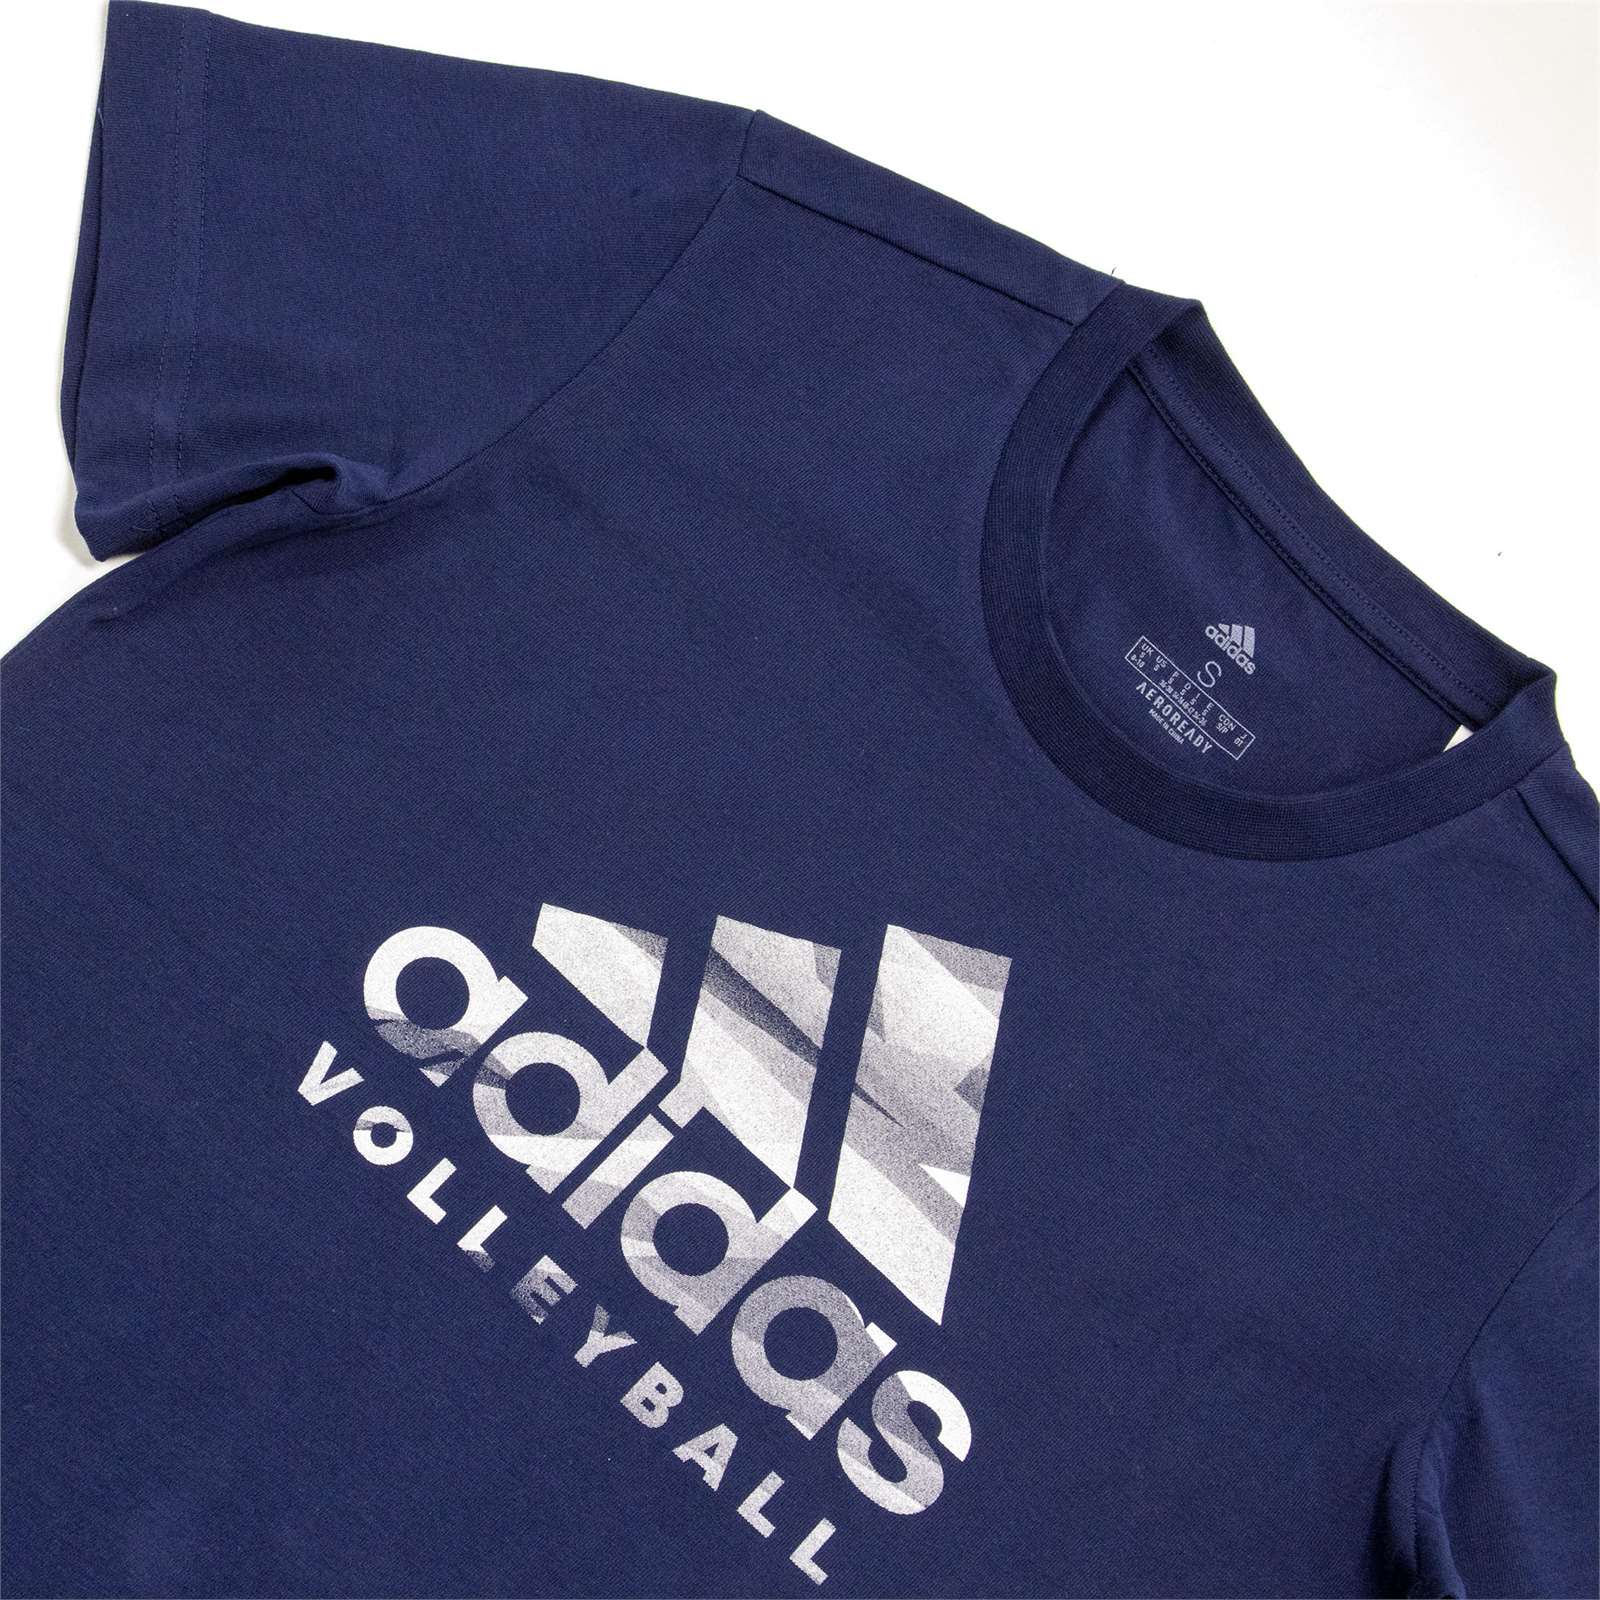 Adidas Women Volleyball Graphic Logo T-Shirt